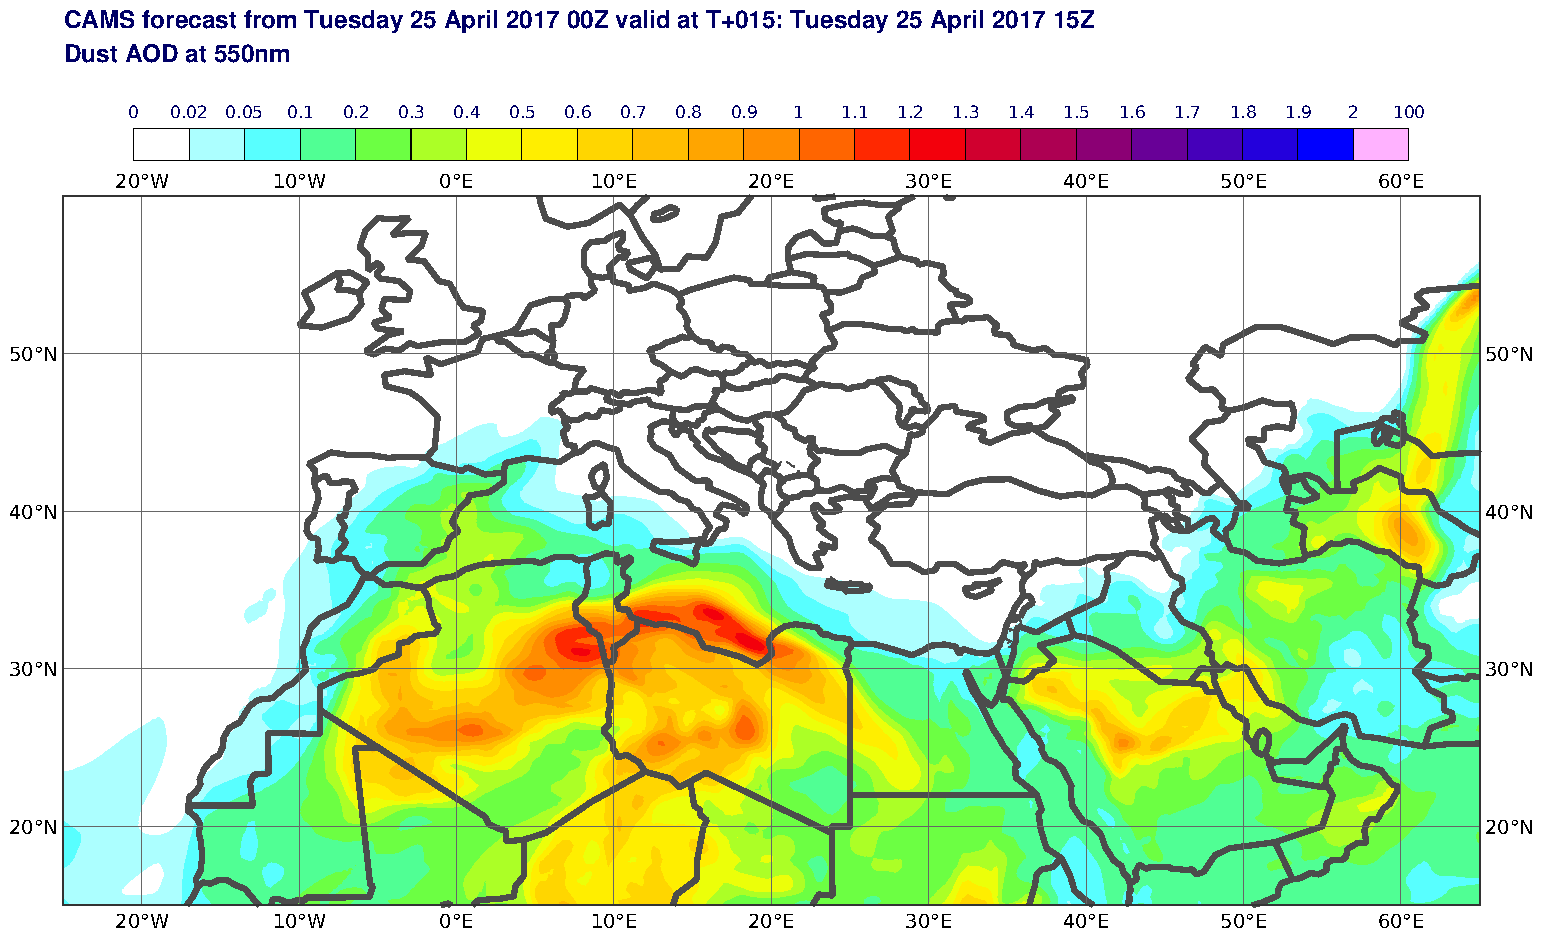 Dust AOD at 550nm valid at T15 - 2017-04-25 15:00